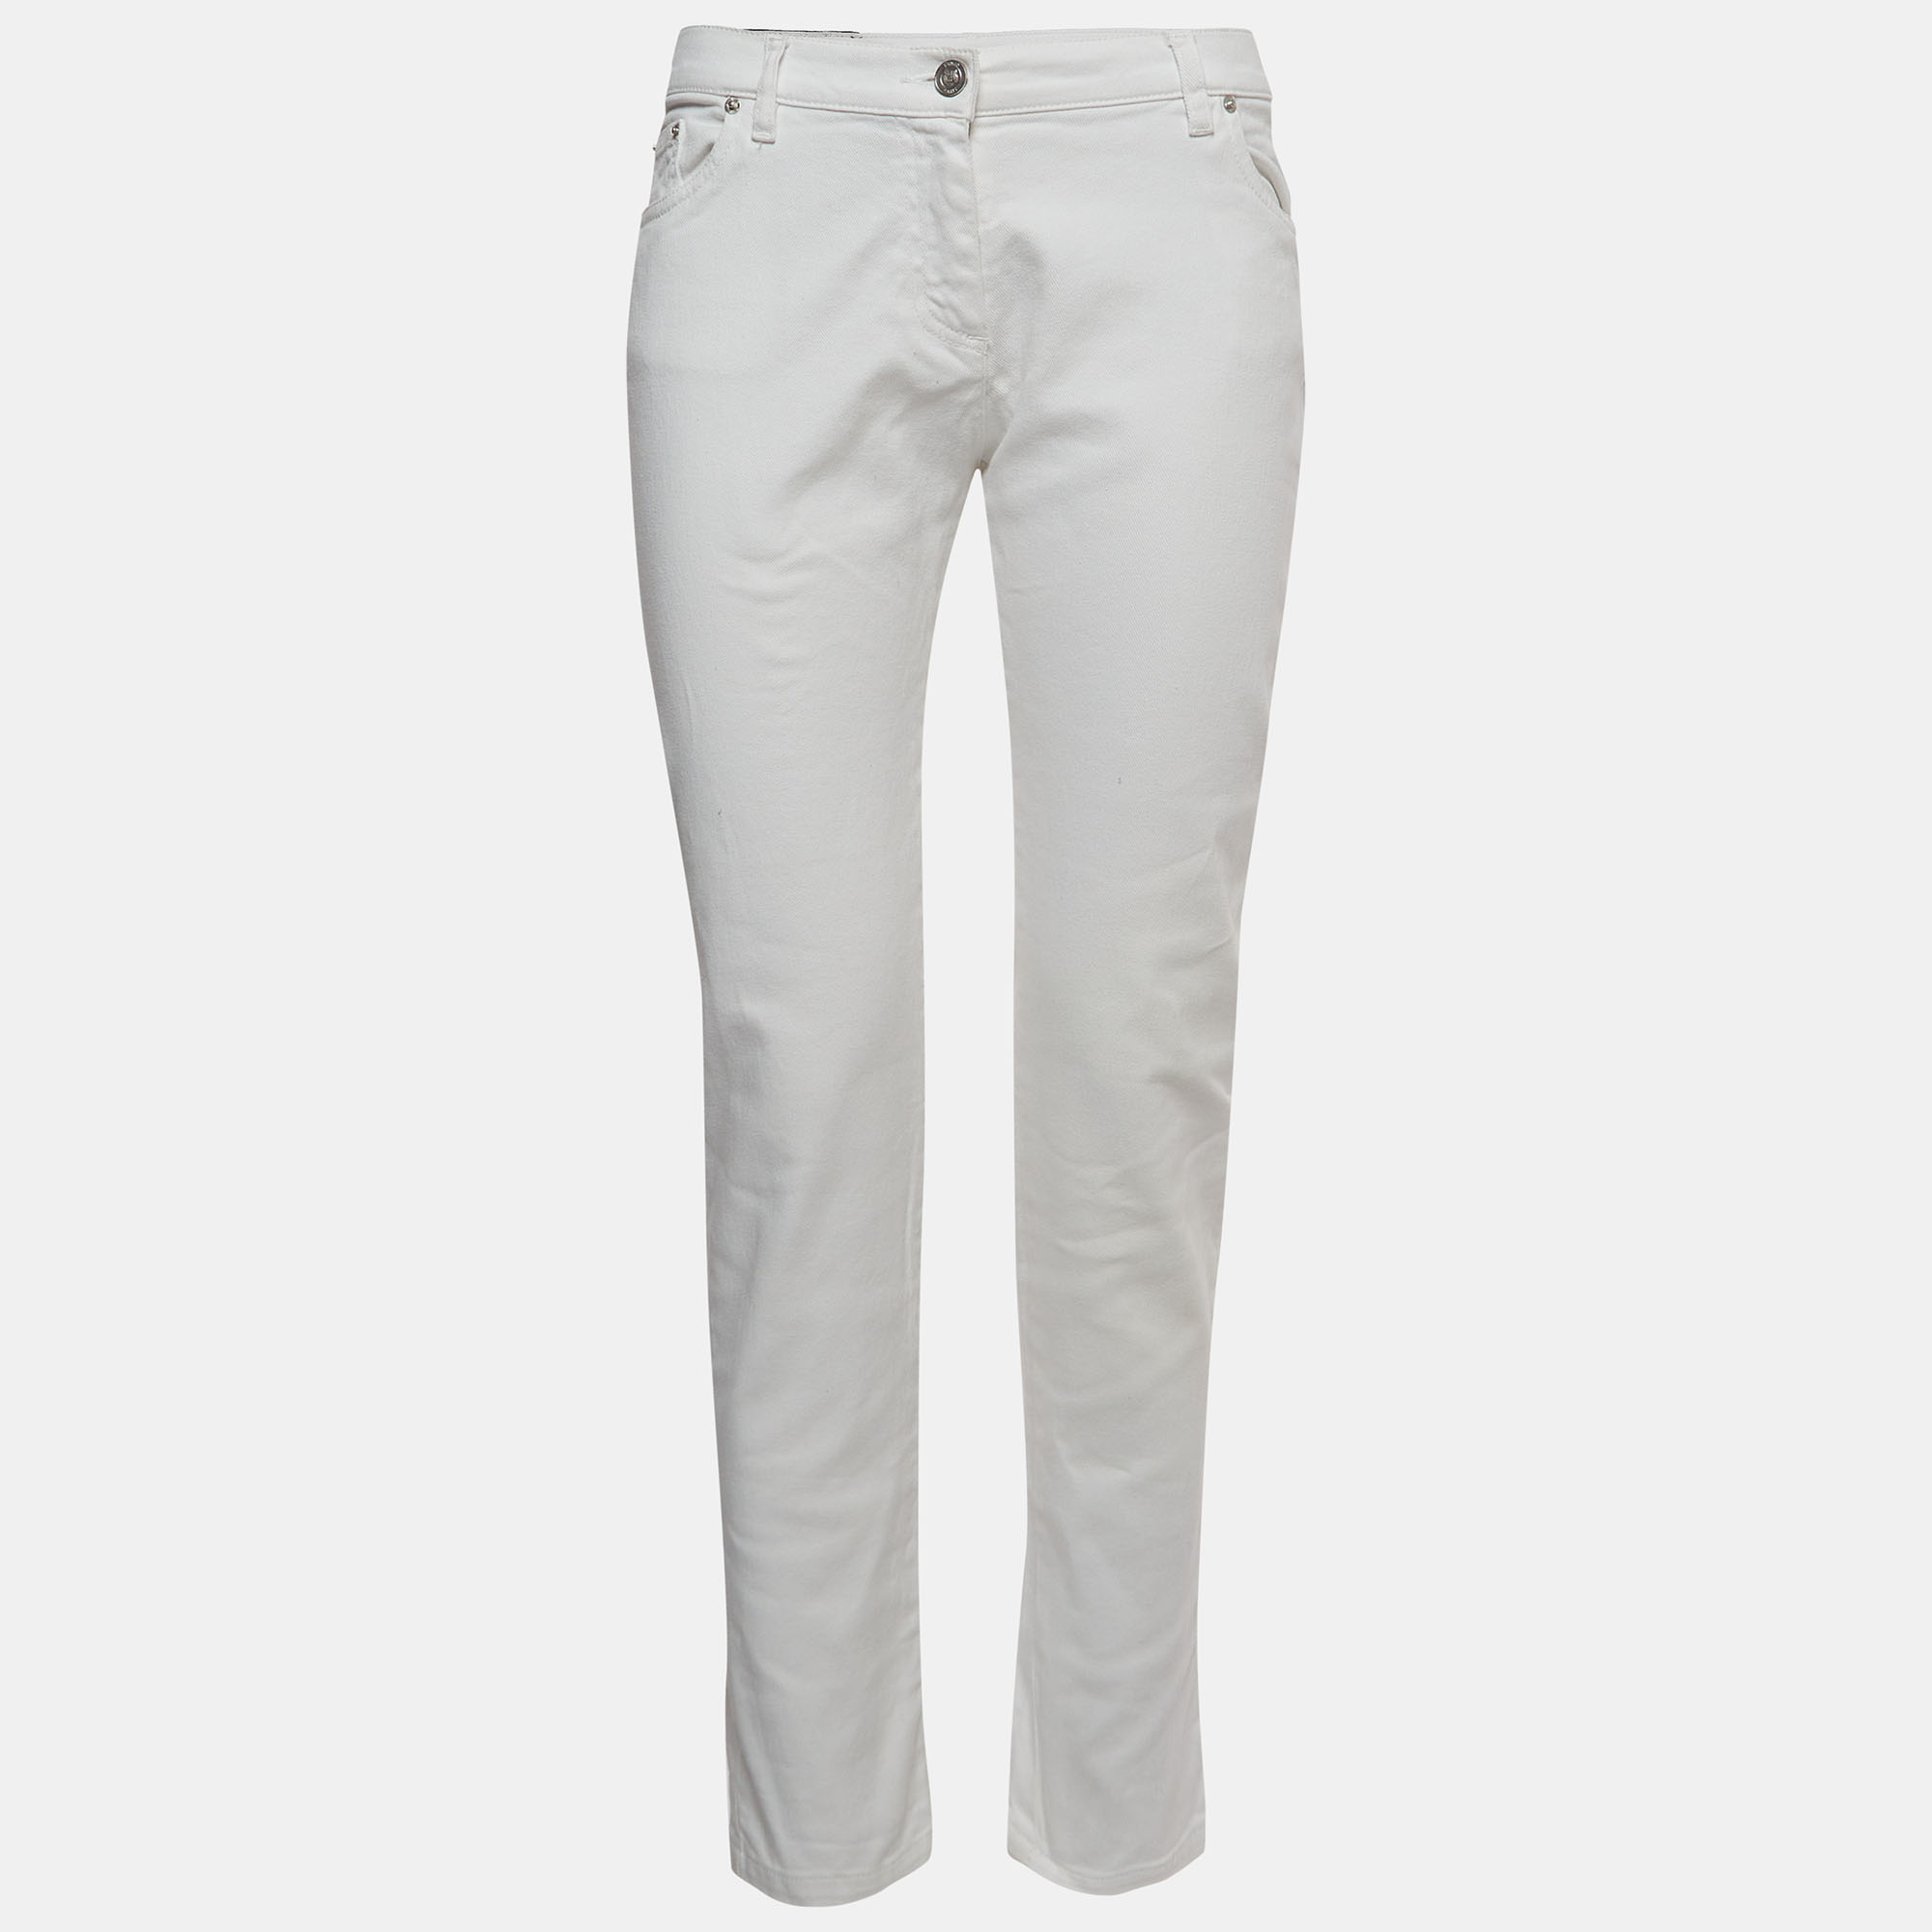 Kenzo jeans kenzo white denim slim fit jeans s